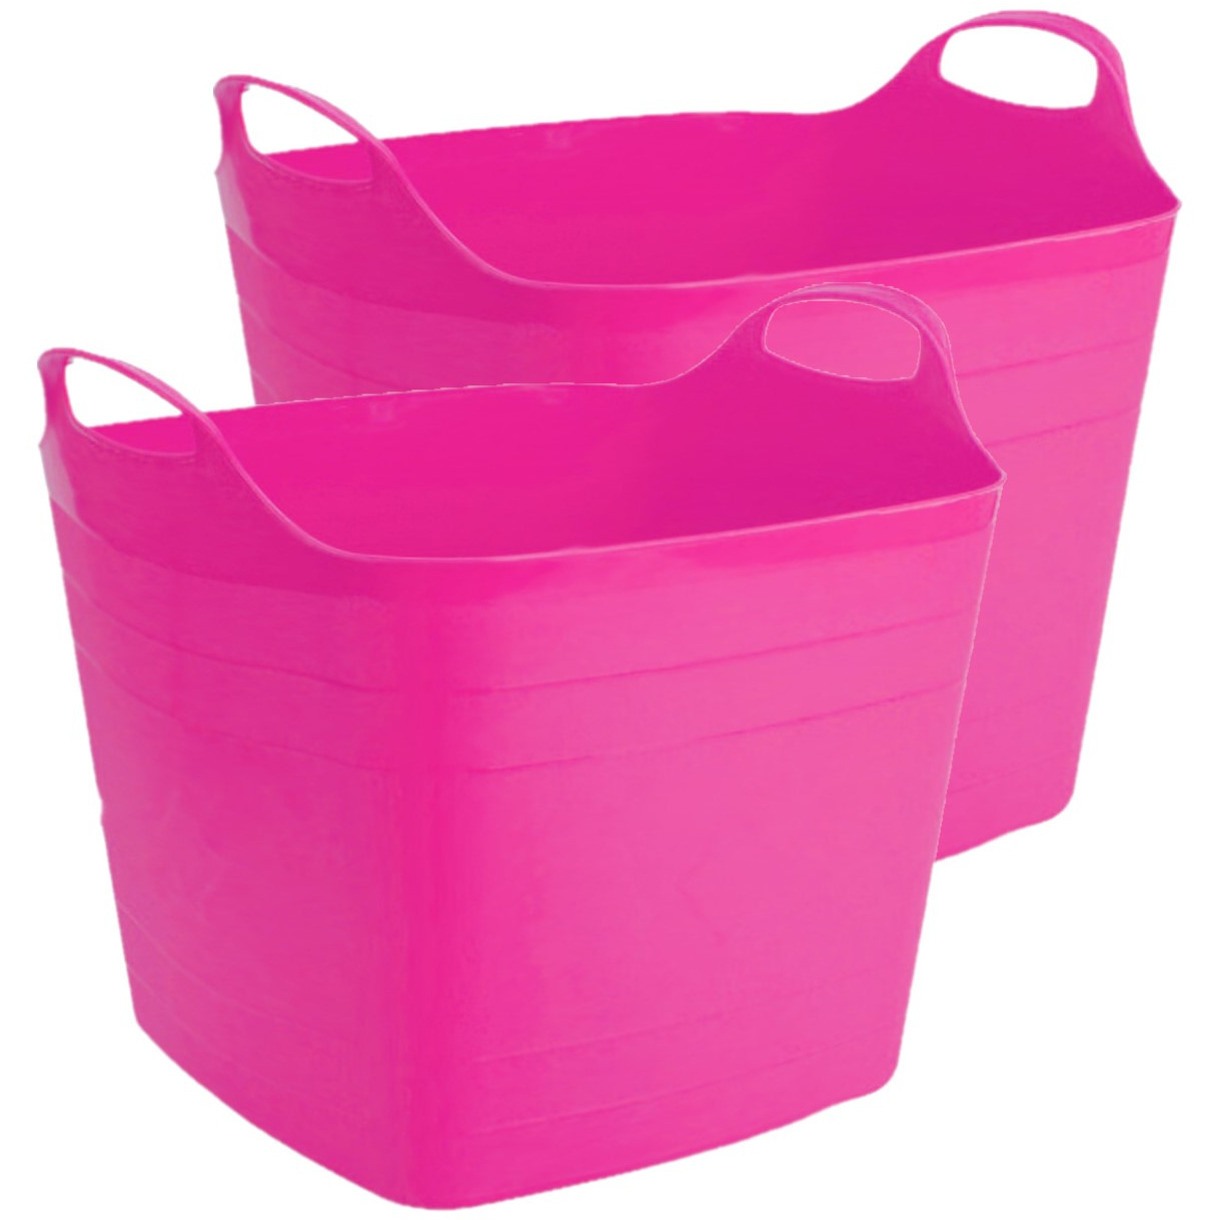 2x stuks flexibele kuip emmer-wasmand vierkant fuchsia roze 40 liter